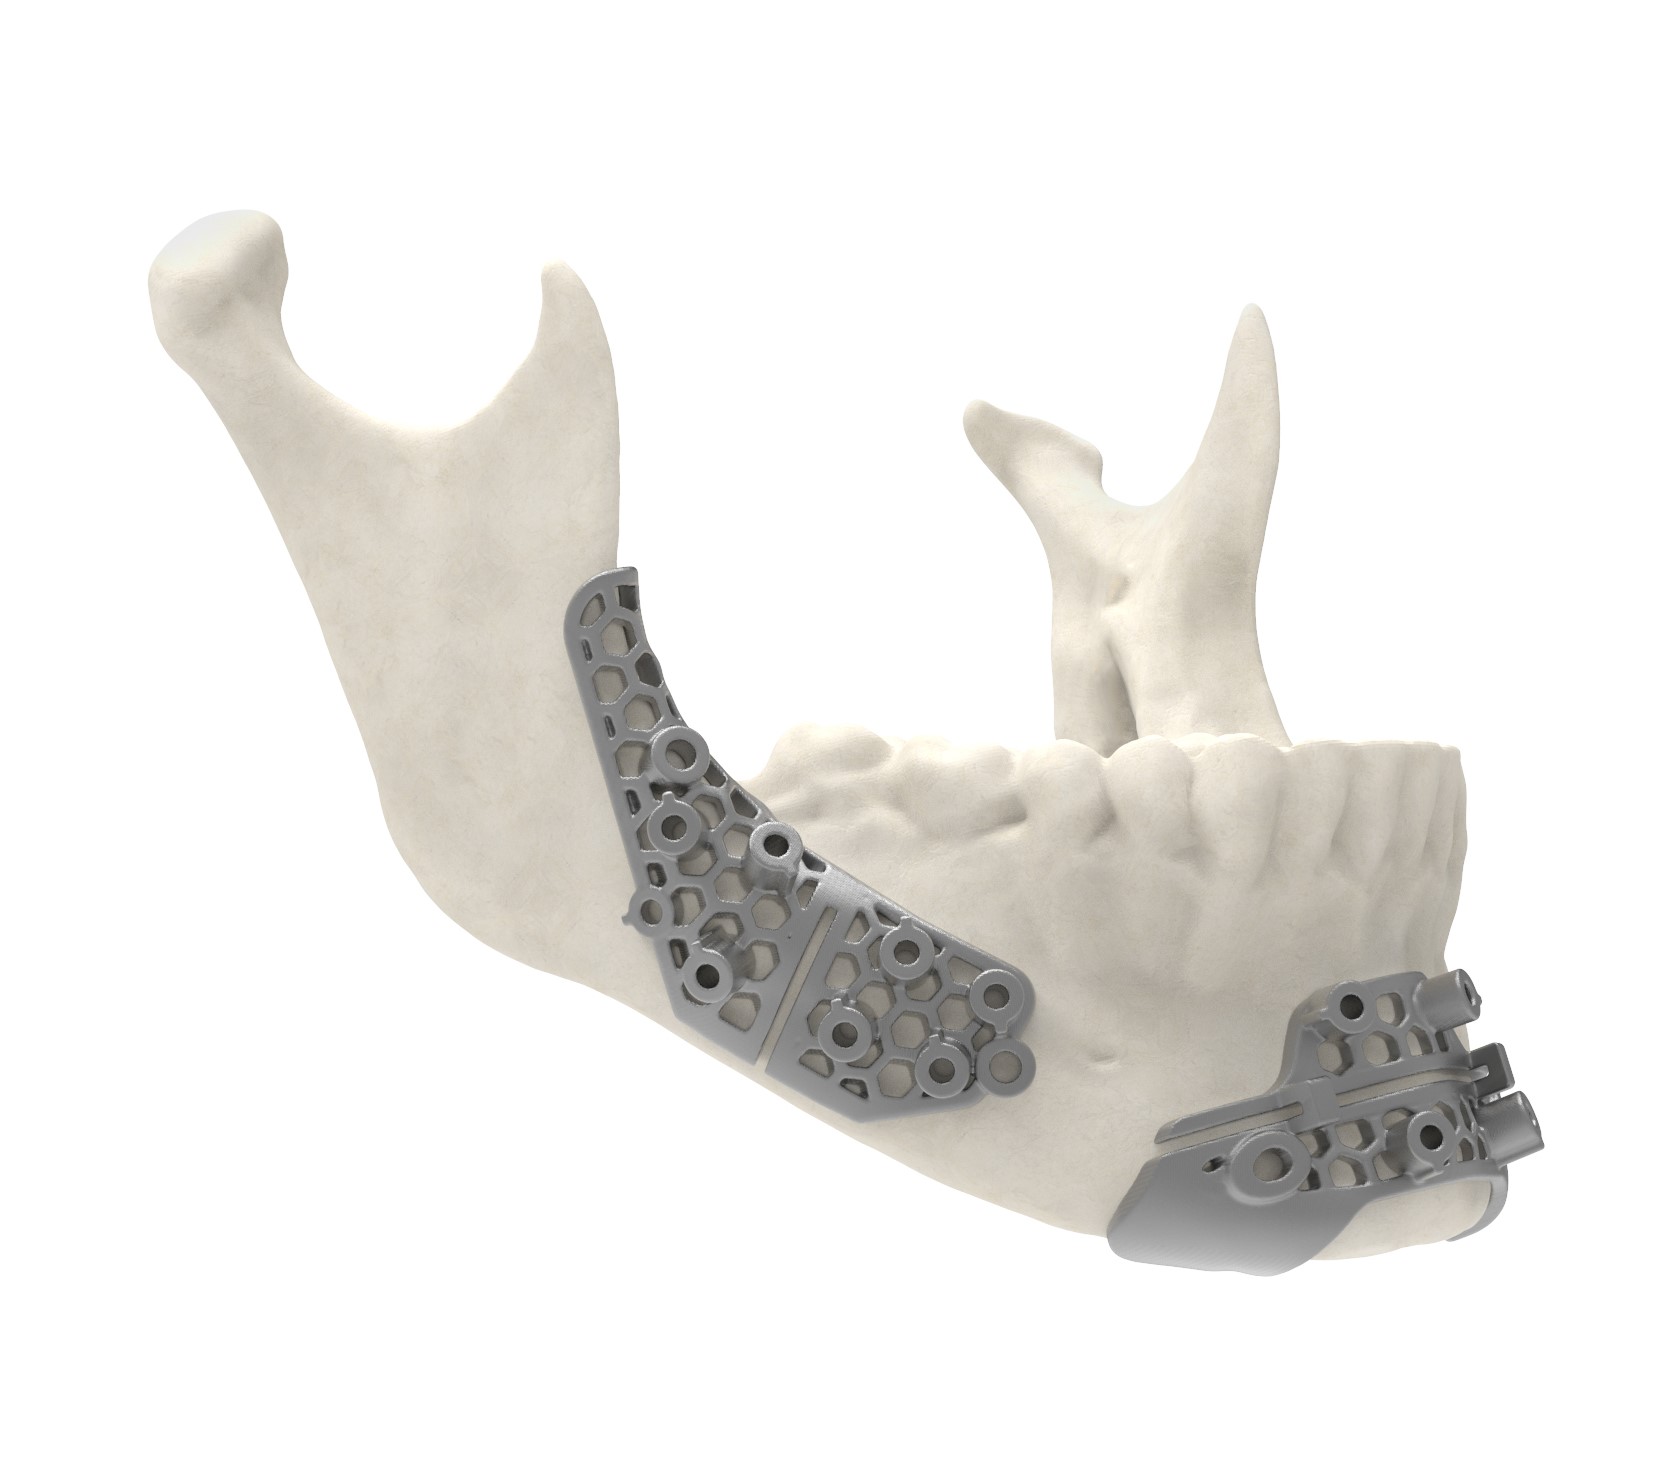 Titanium surgical guide. Image via 3D Systems.